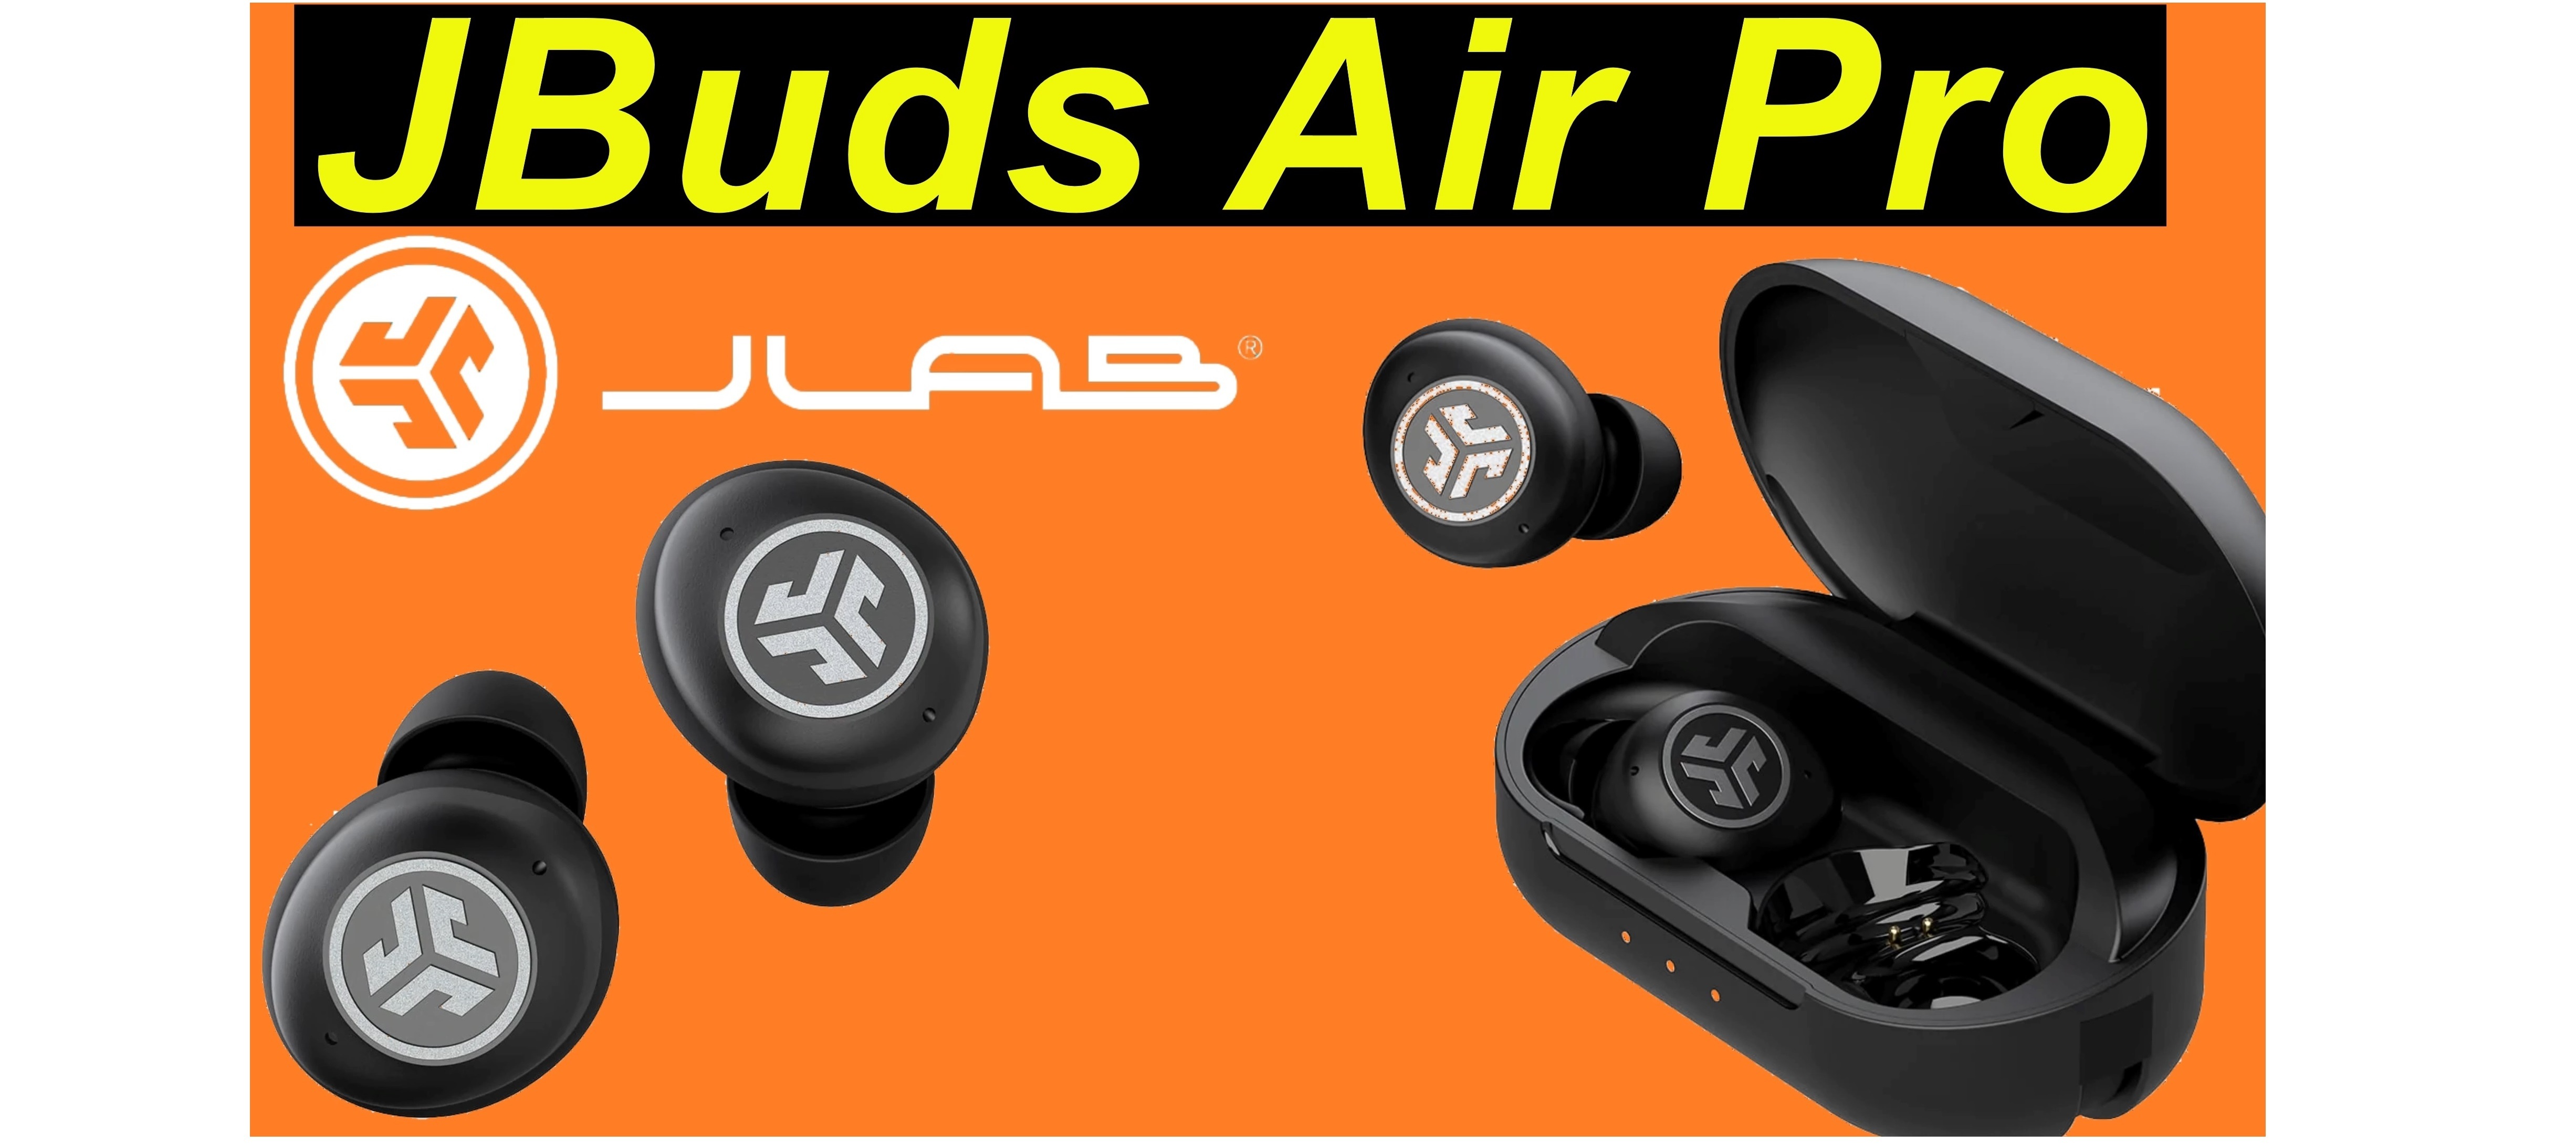 JLab - JBuds Air Pro True Wireless Earbuds im Test